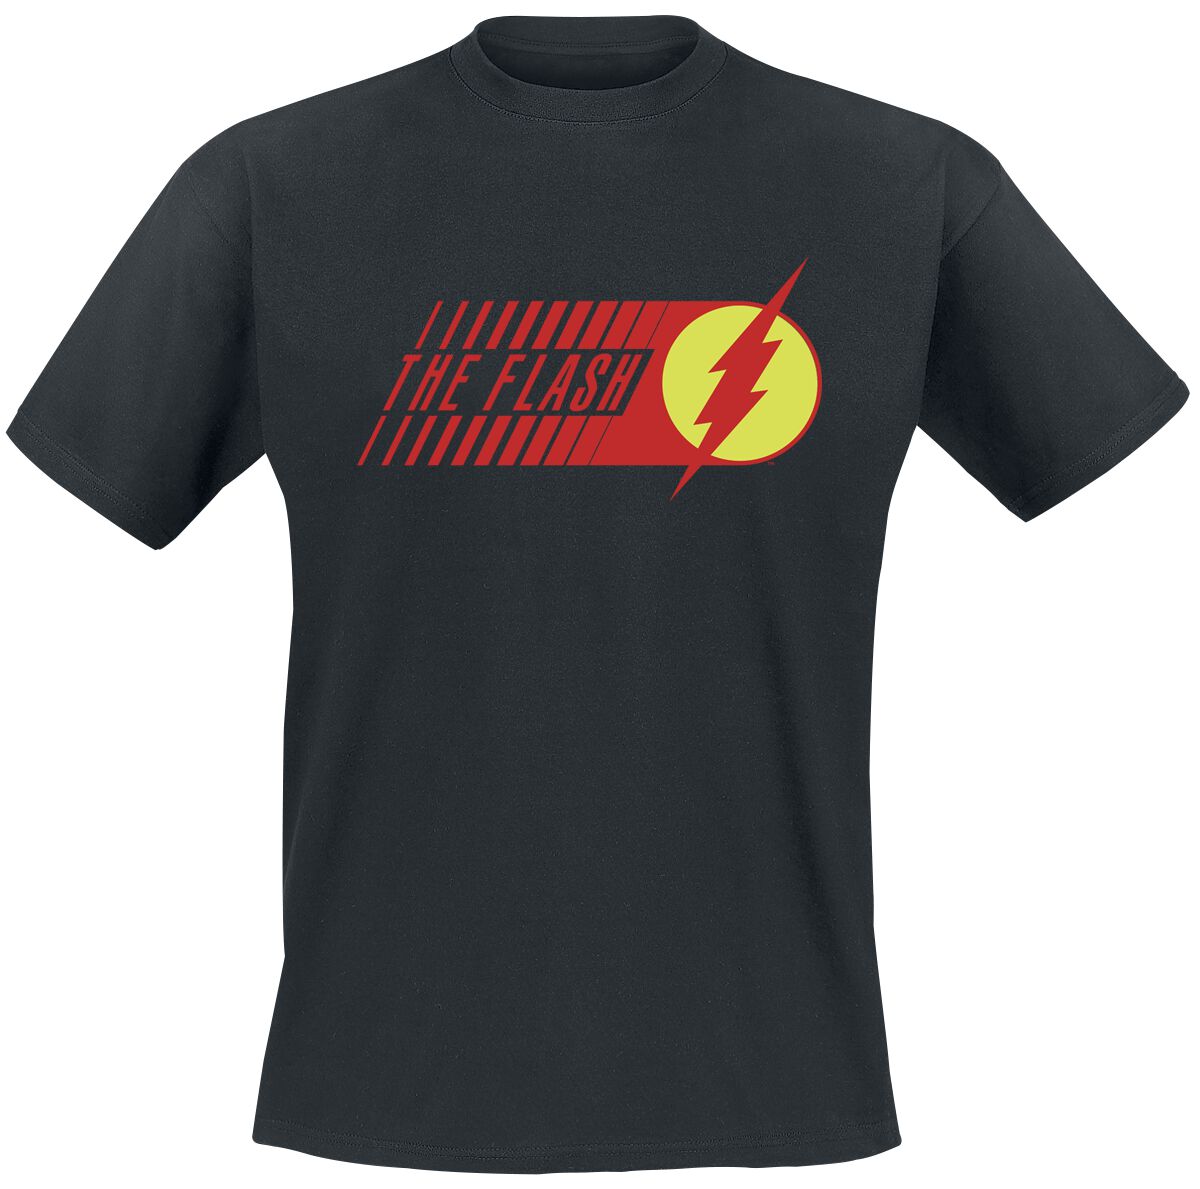 The Flash Flash - Starlabs T-Shirt schwarz in M